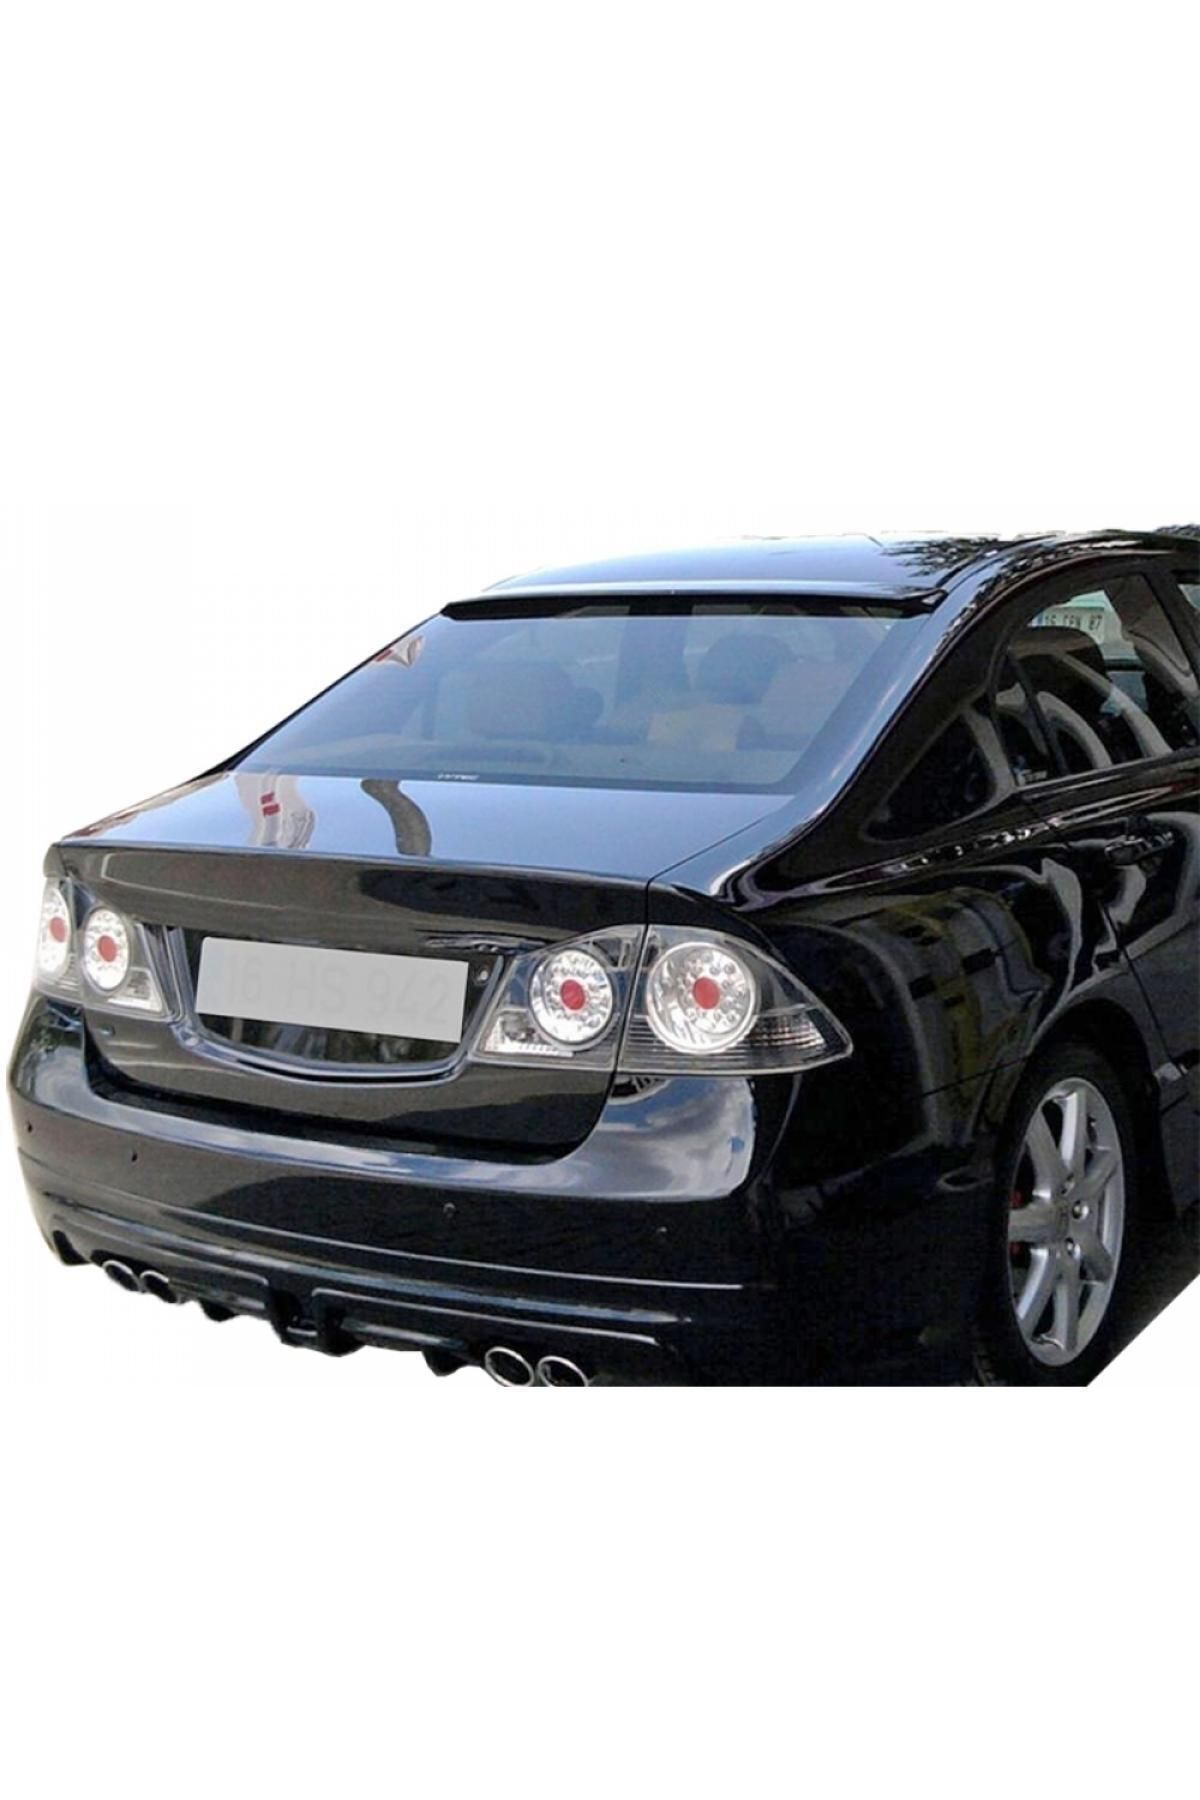 aksarabana Honda Civic Fd6 Hibrid Style Cam Üstü Spoiler Parlak Siyah (PİANO BLACK) Boyalı